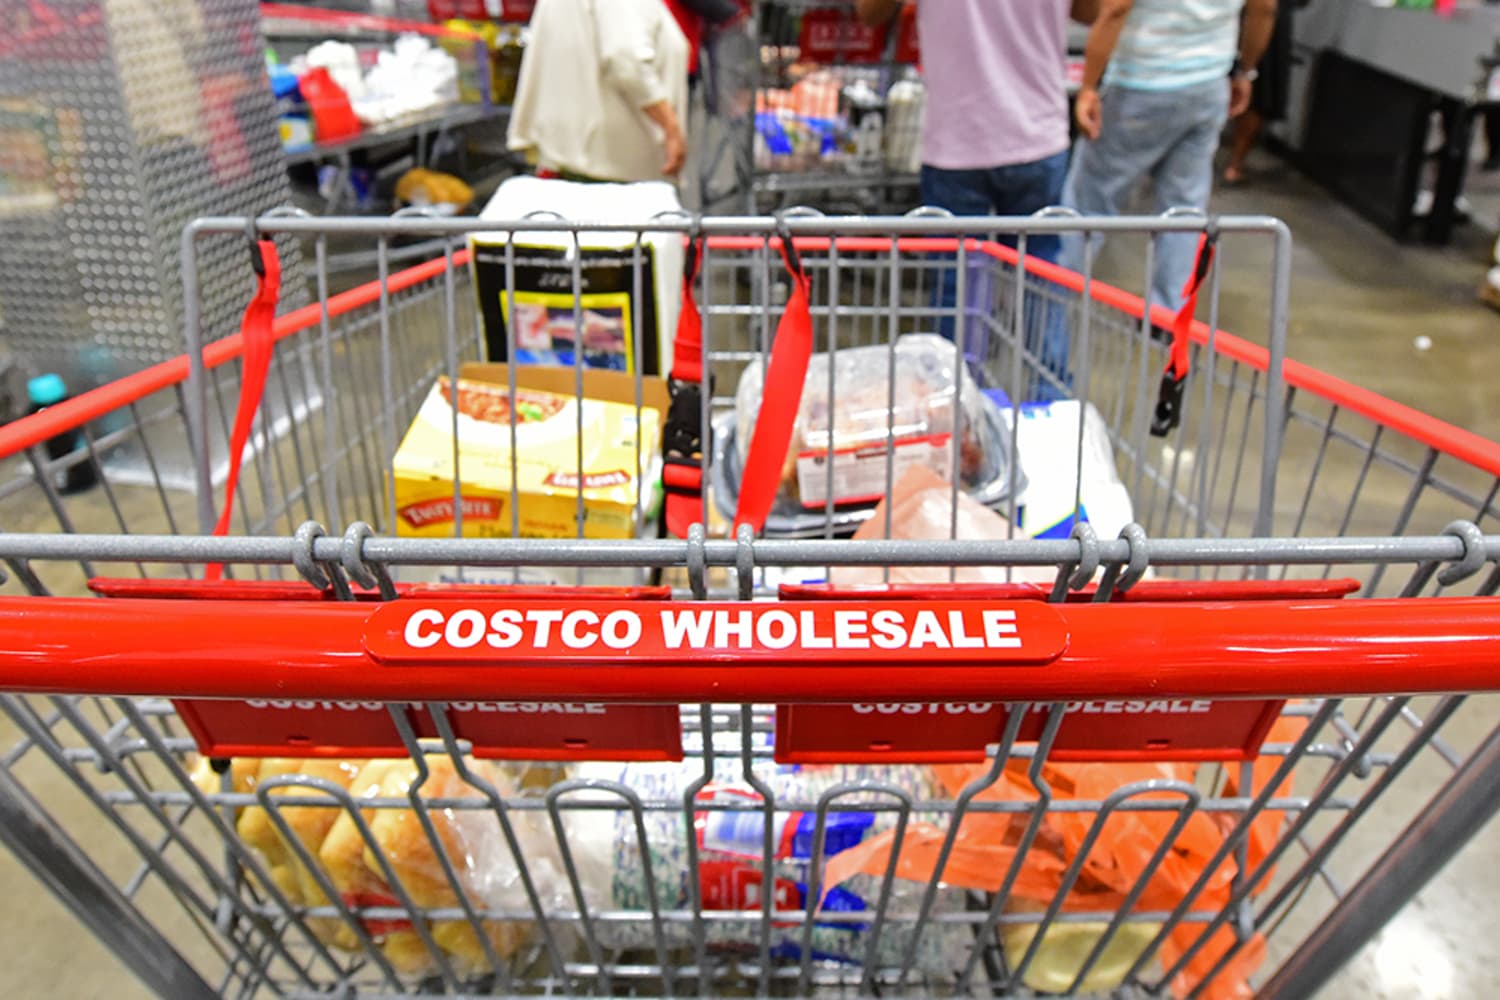 6 Costco Price Codes You Should Memorize, According to an Expert Shopper